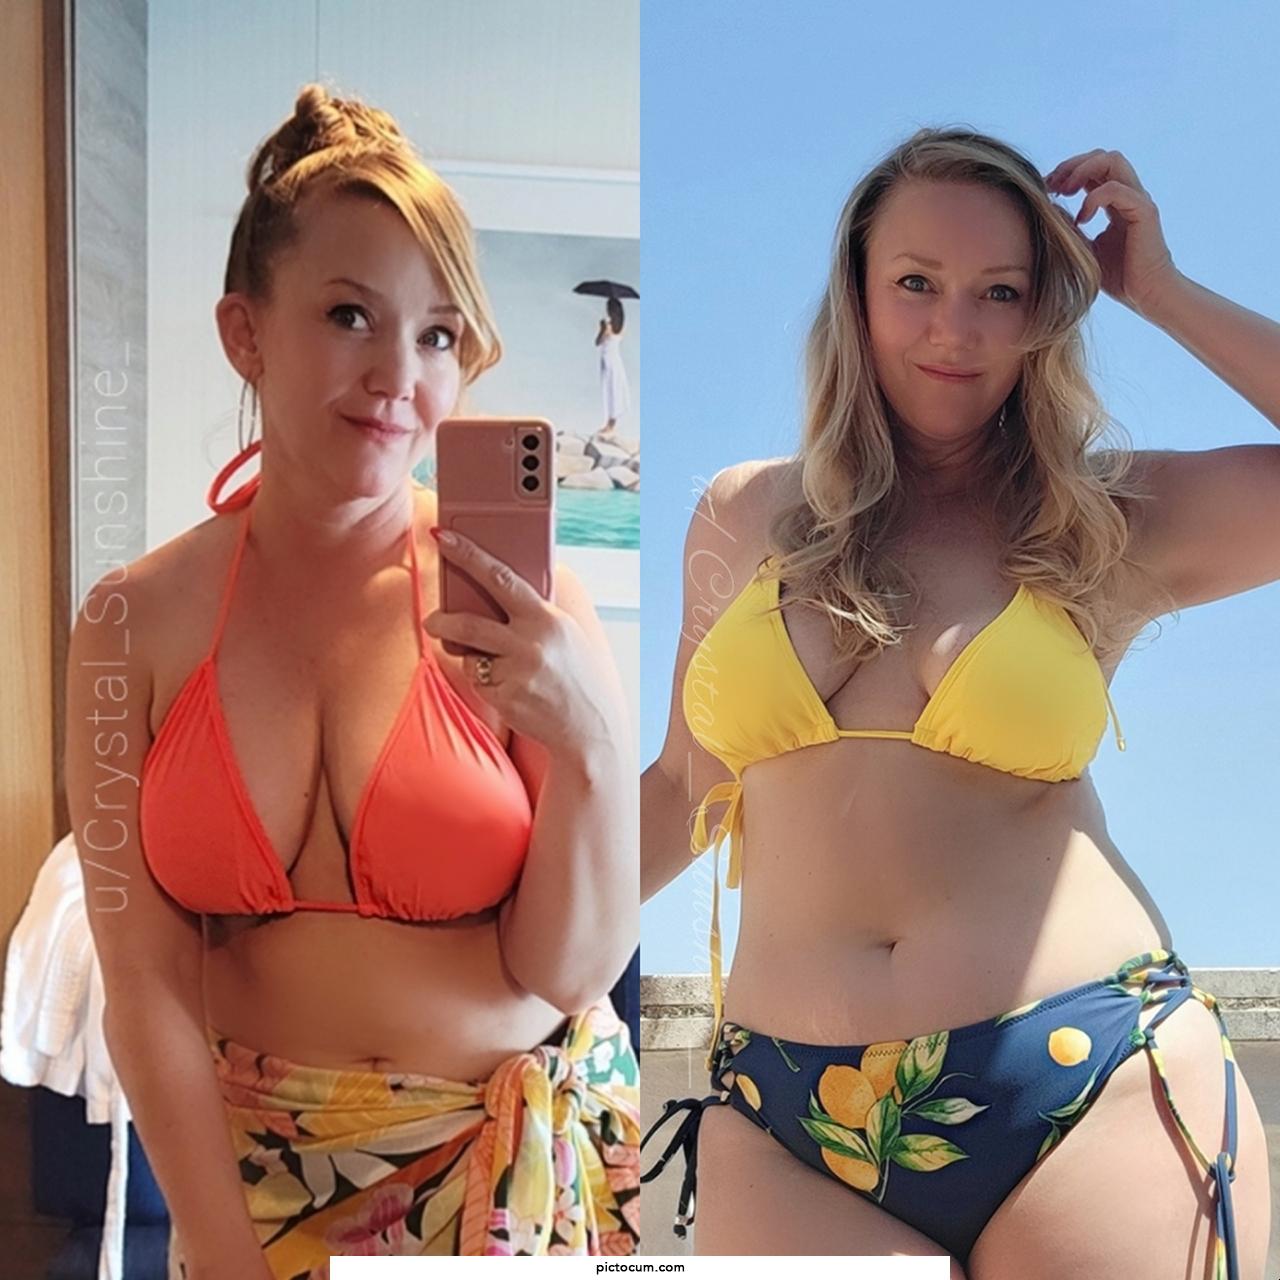 Am I hot enough for a bikini at 48?